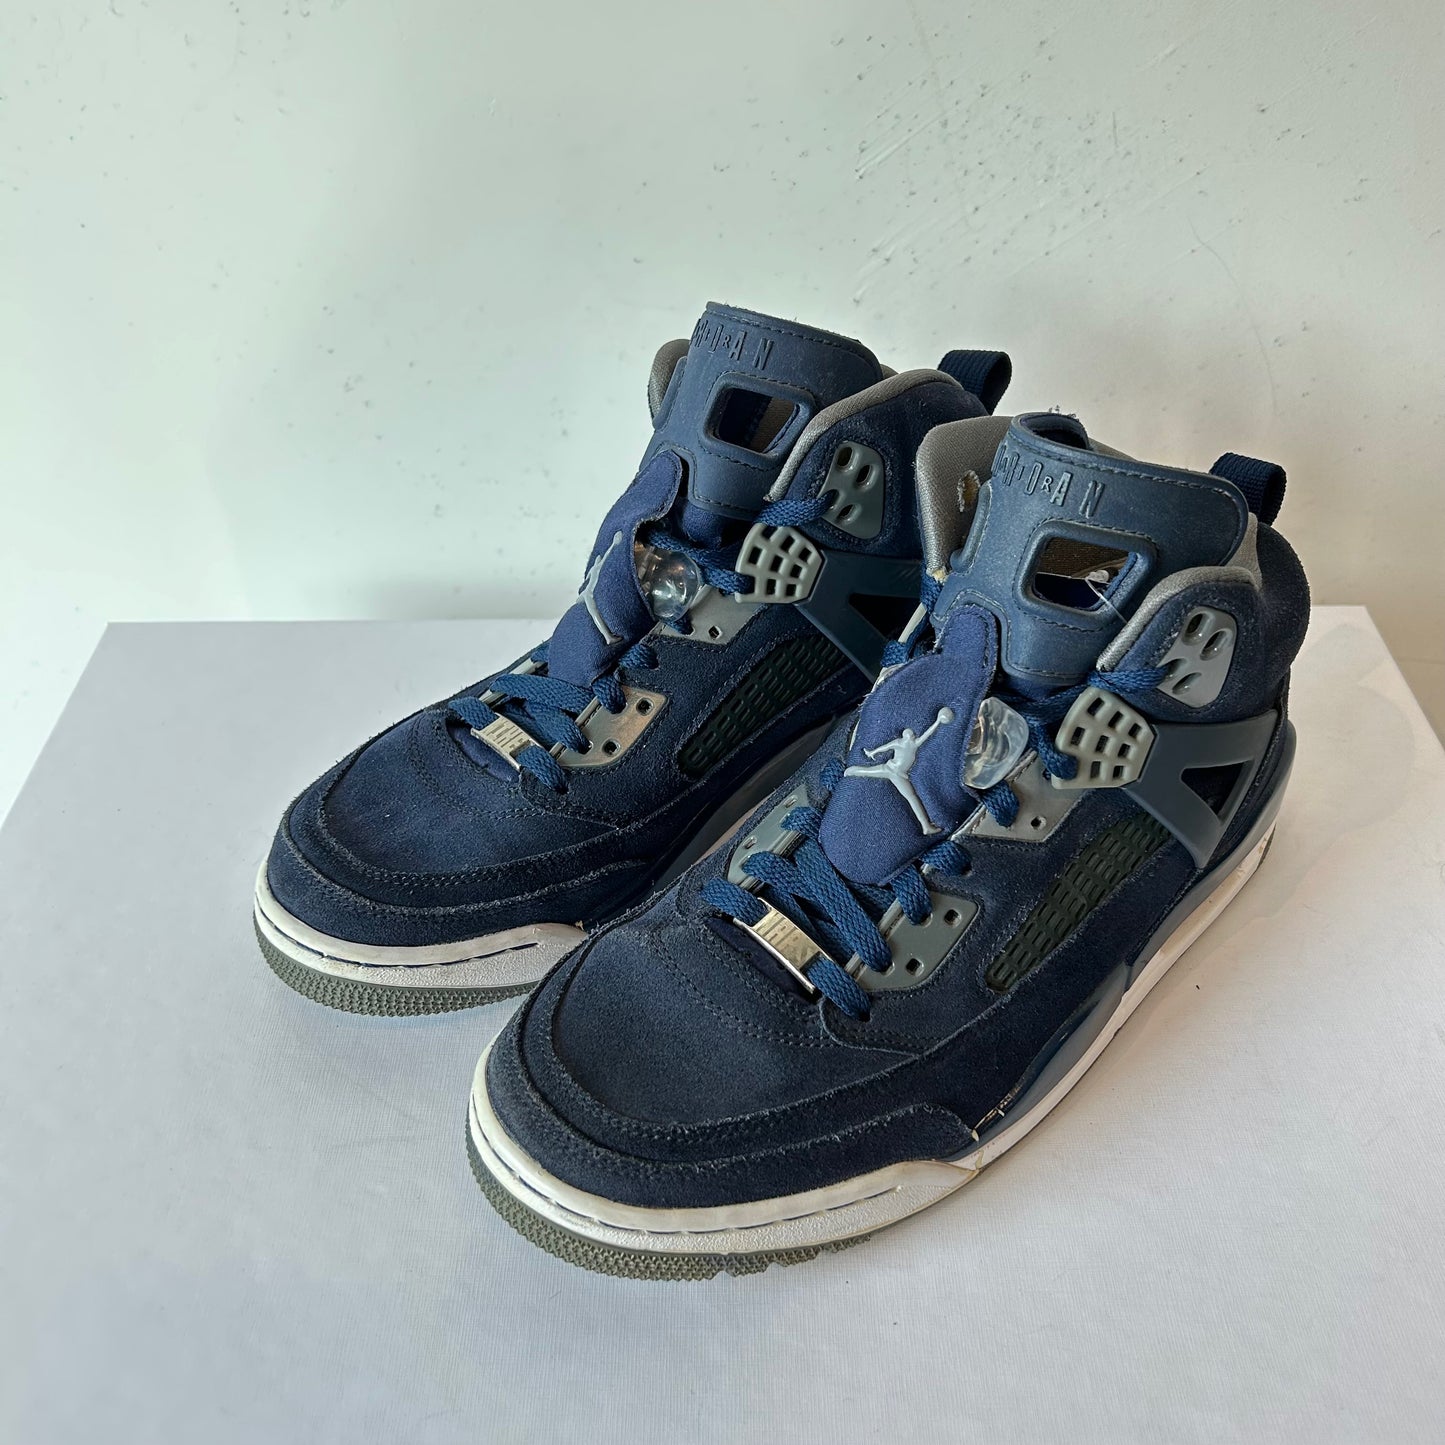 9 Air Jordan Spizike Men's Navy Shoes